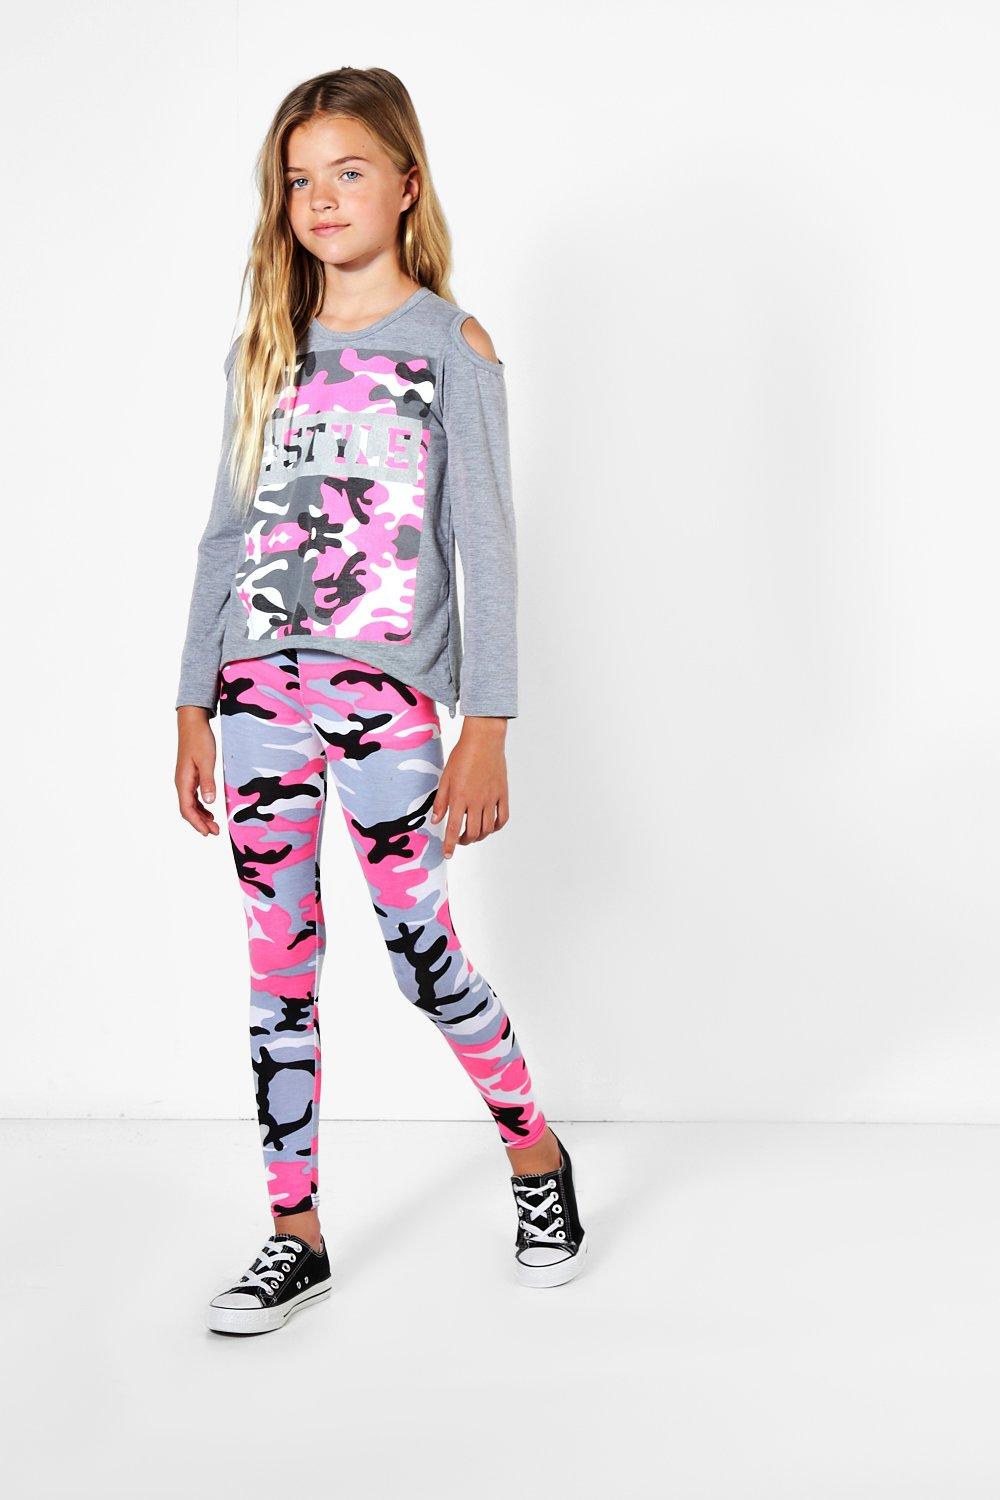 Boohoo Kids Girls Cold Shoulder Camo Print Tee And Legging Set | eBay